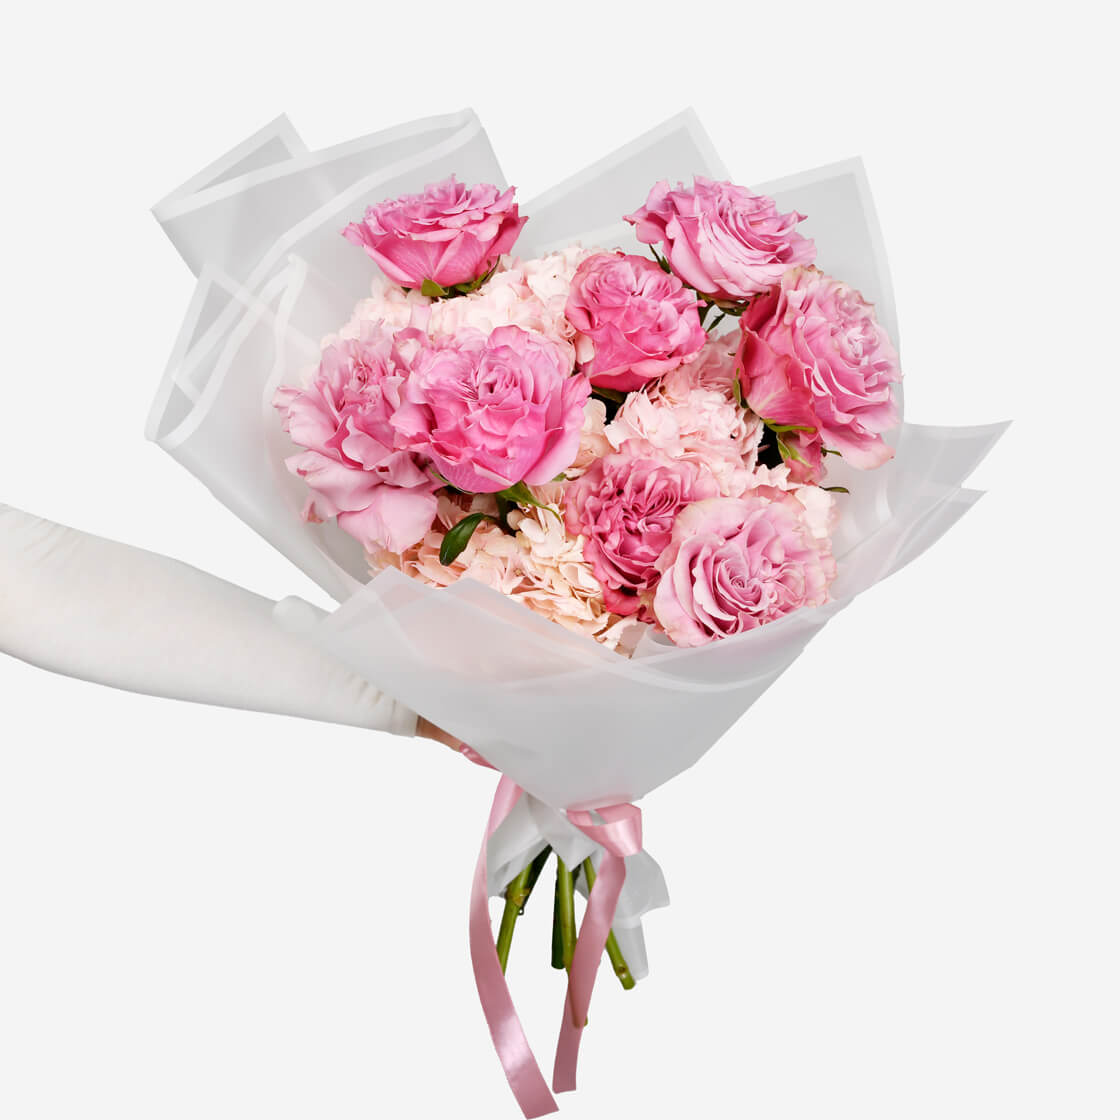 Buchet cu hortensie si trandafiri roz, 2